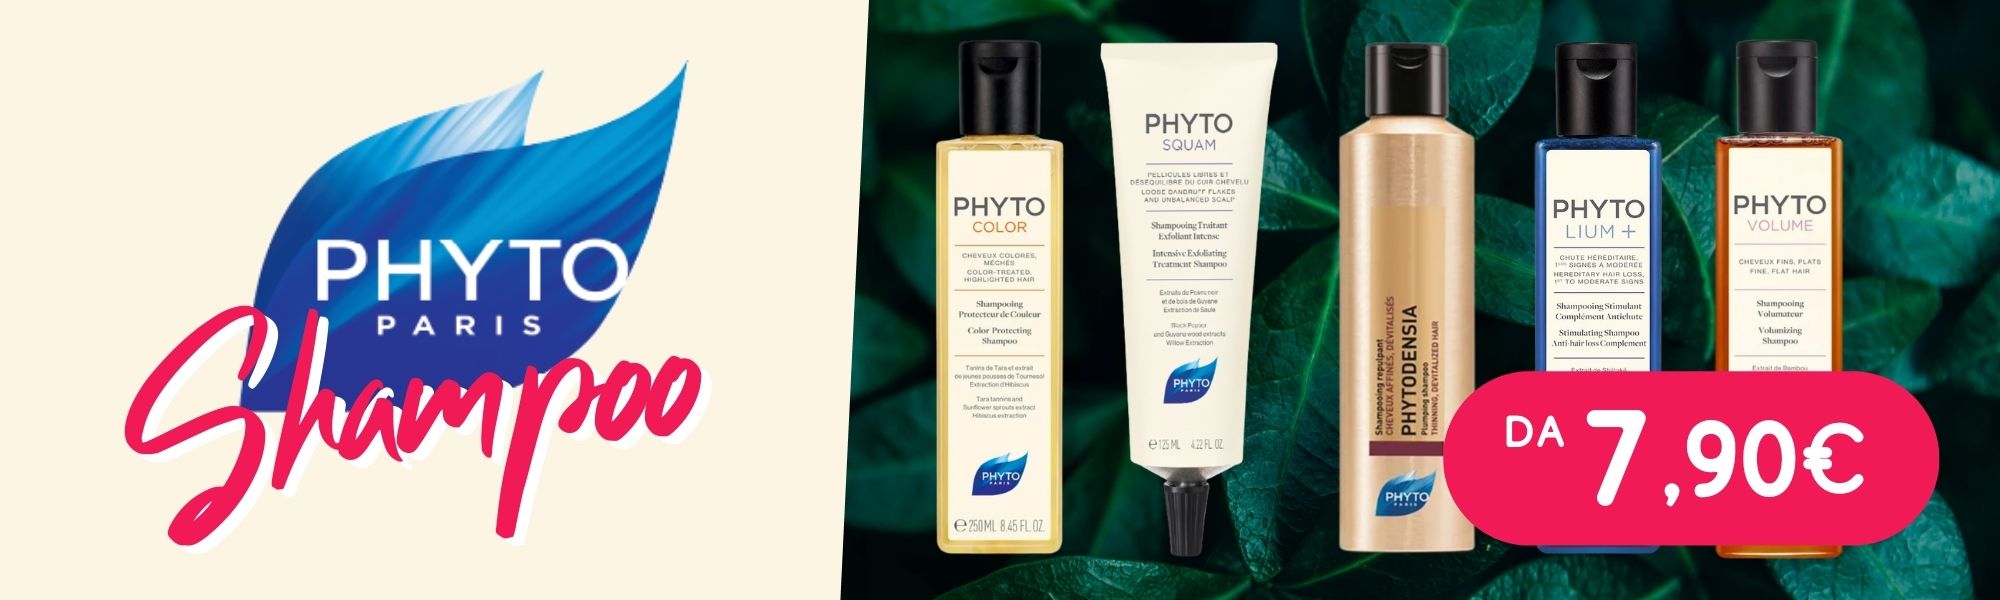 Offerta Shampoo Phyto